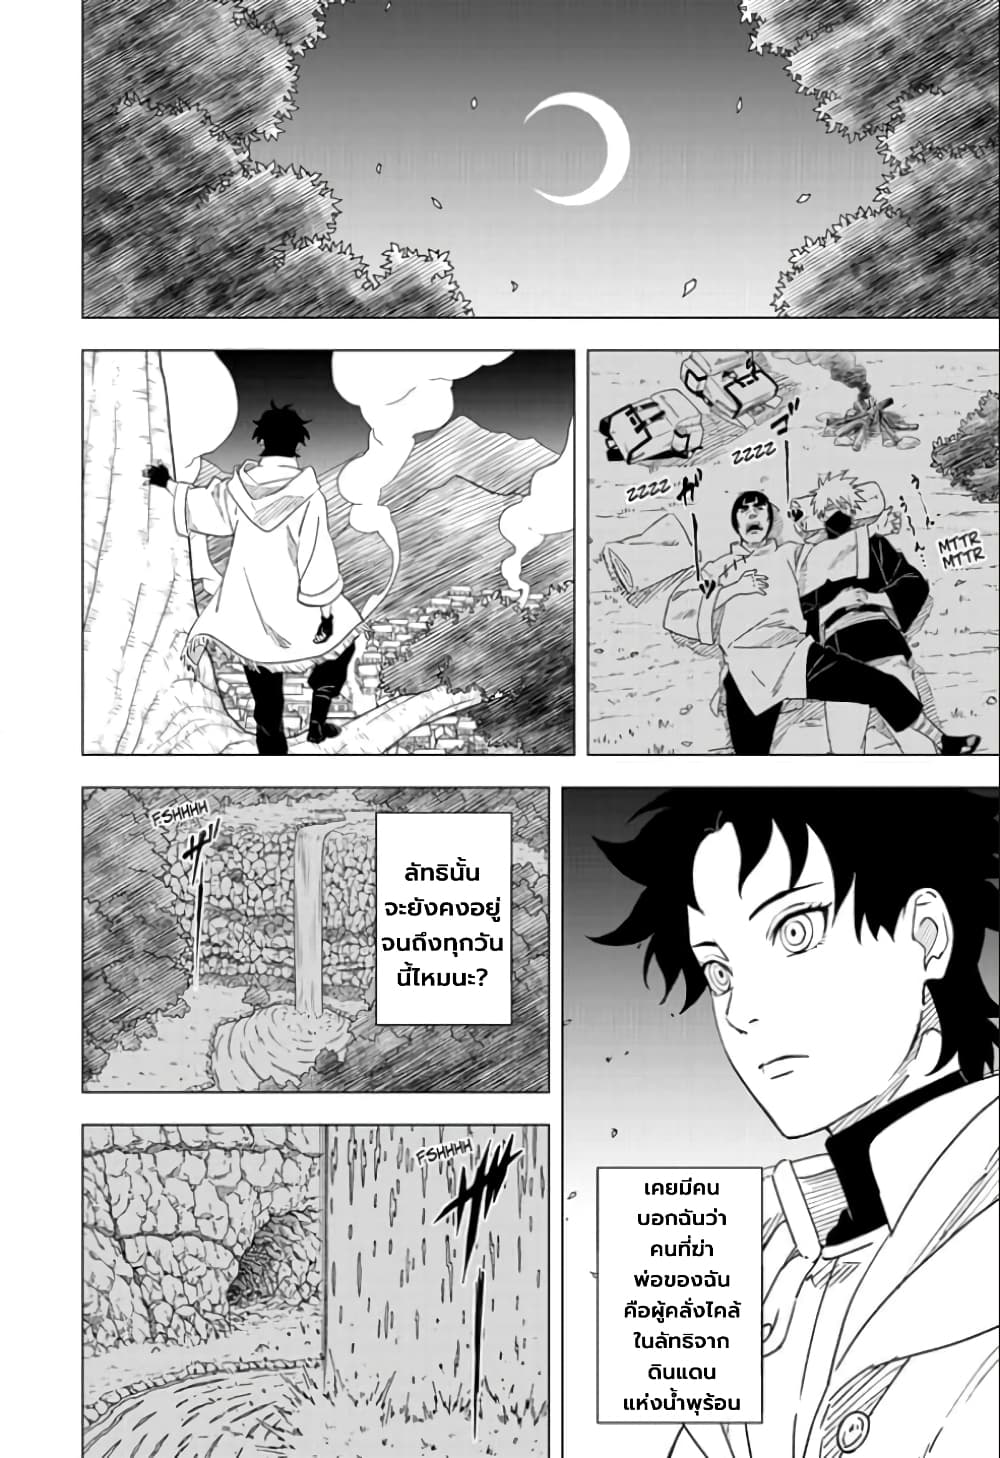 Naruto Konoha’s Story – The Steam Ninja Scrolls The Manga ตอนที่ 6 (18)